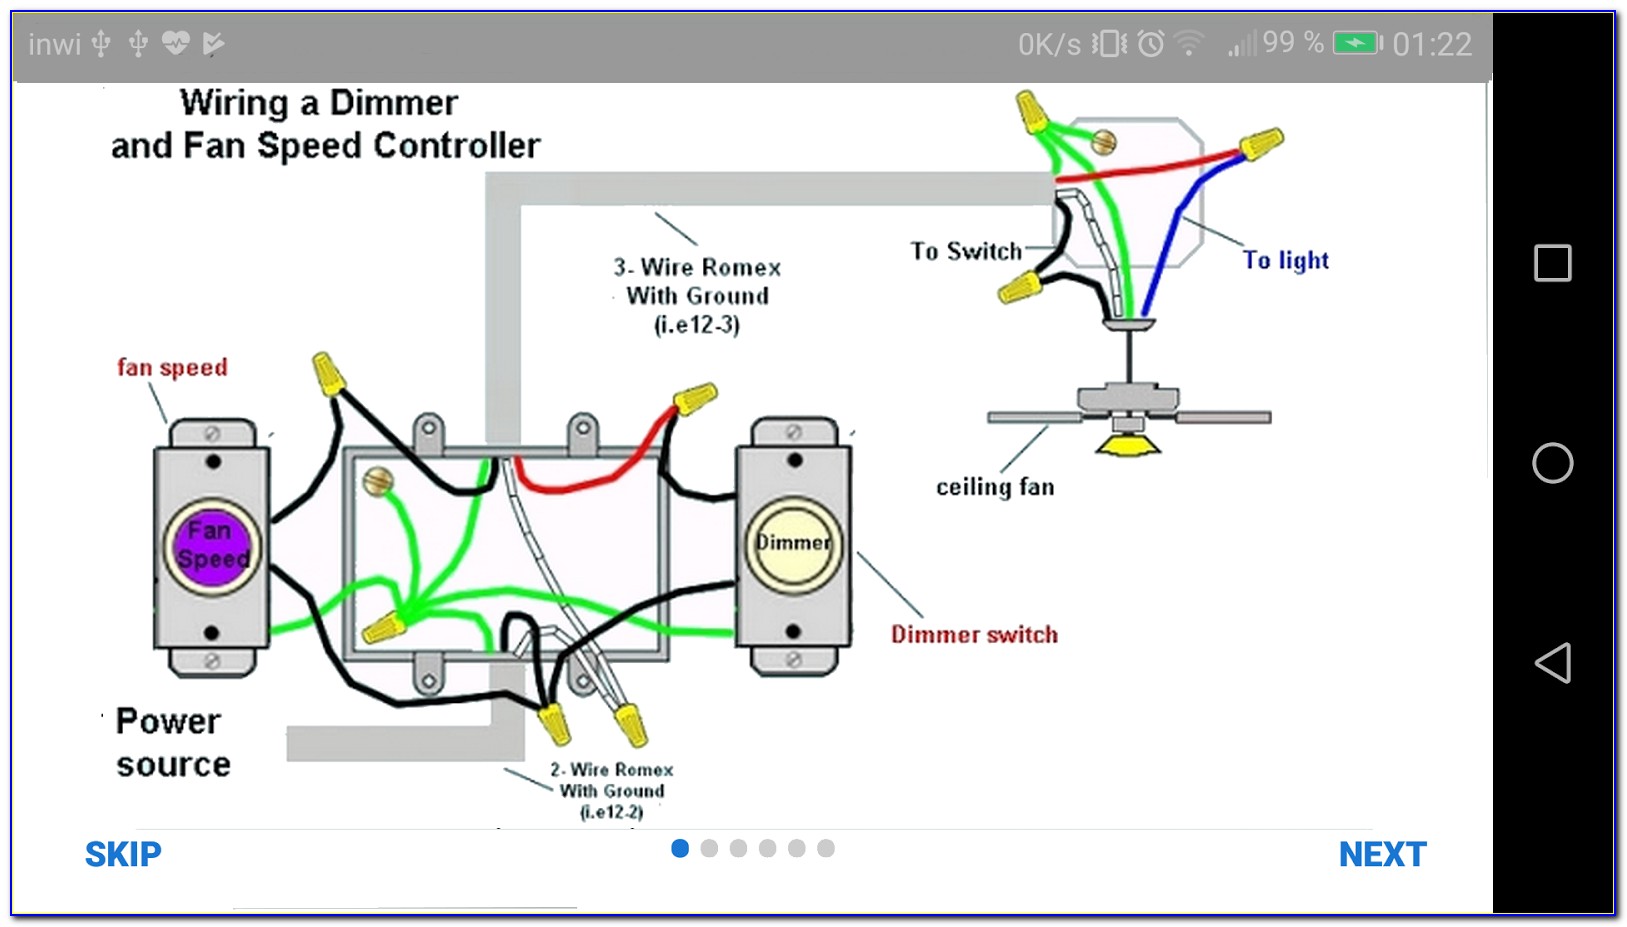 Wiring Diagram Application